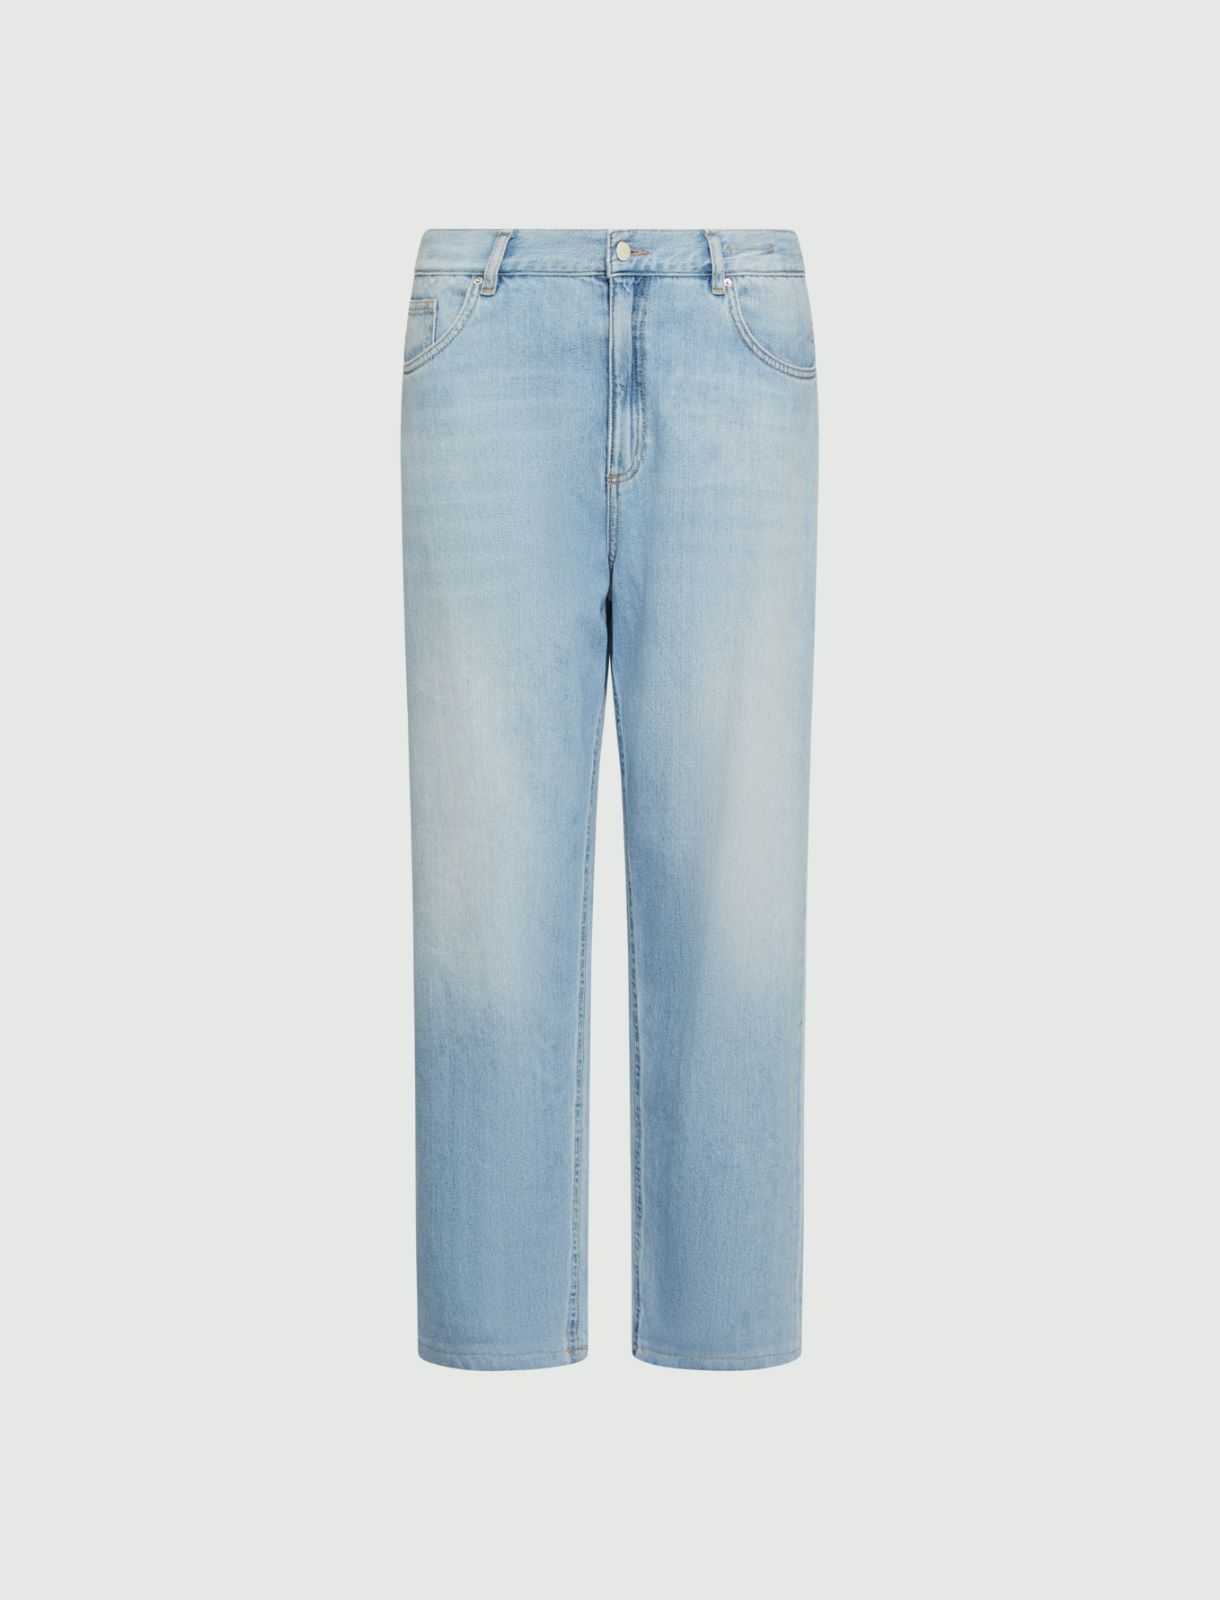 Jean coupe tomboy - Bleu jeans - Marella - 6